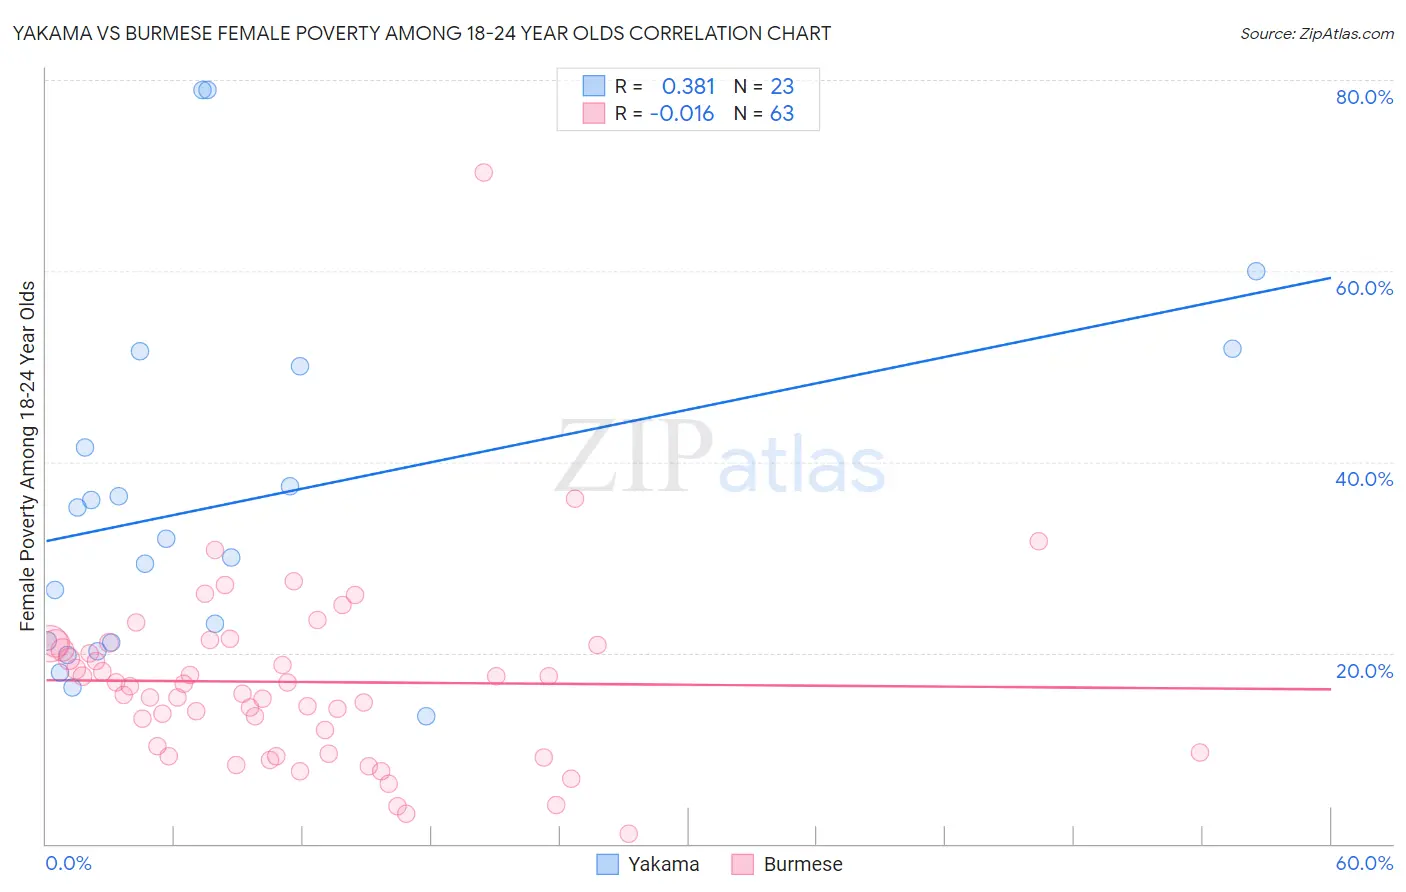 Yakama vs Burmese Female Poverty Among 18-24 Year Olds